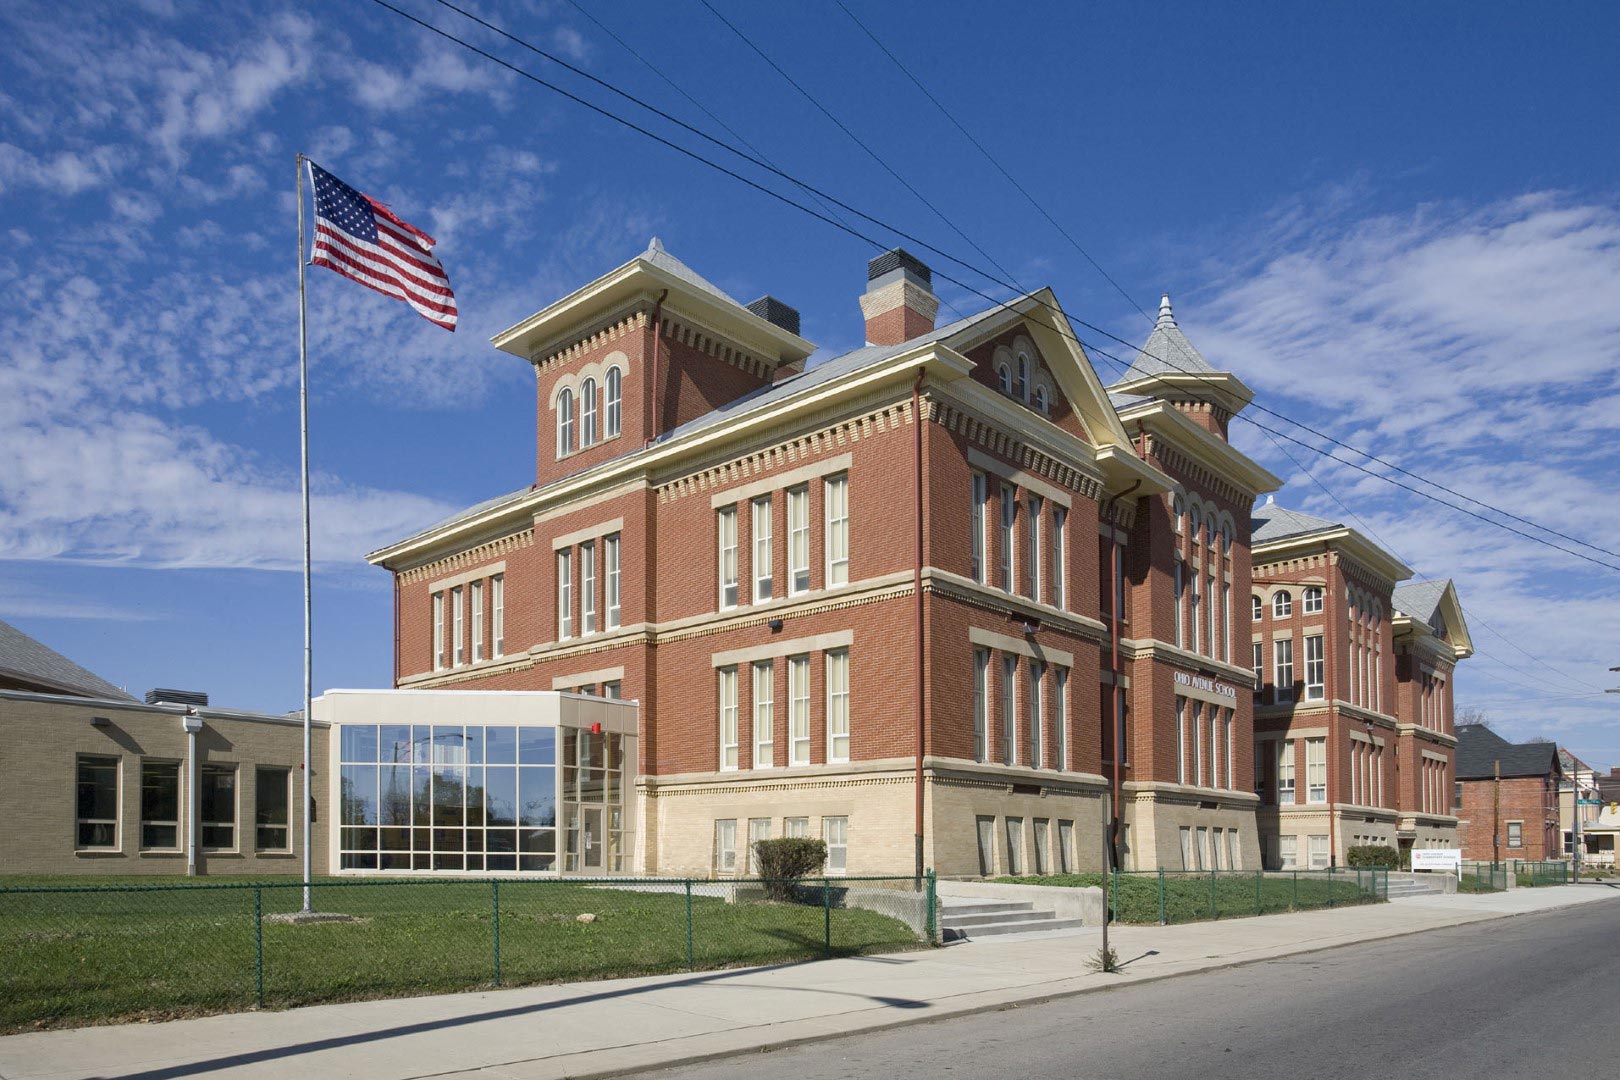 Ohio Avenue Elementary School, Exterior of historic building